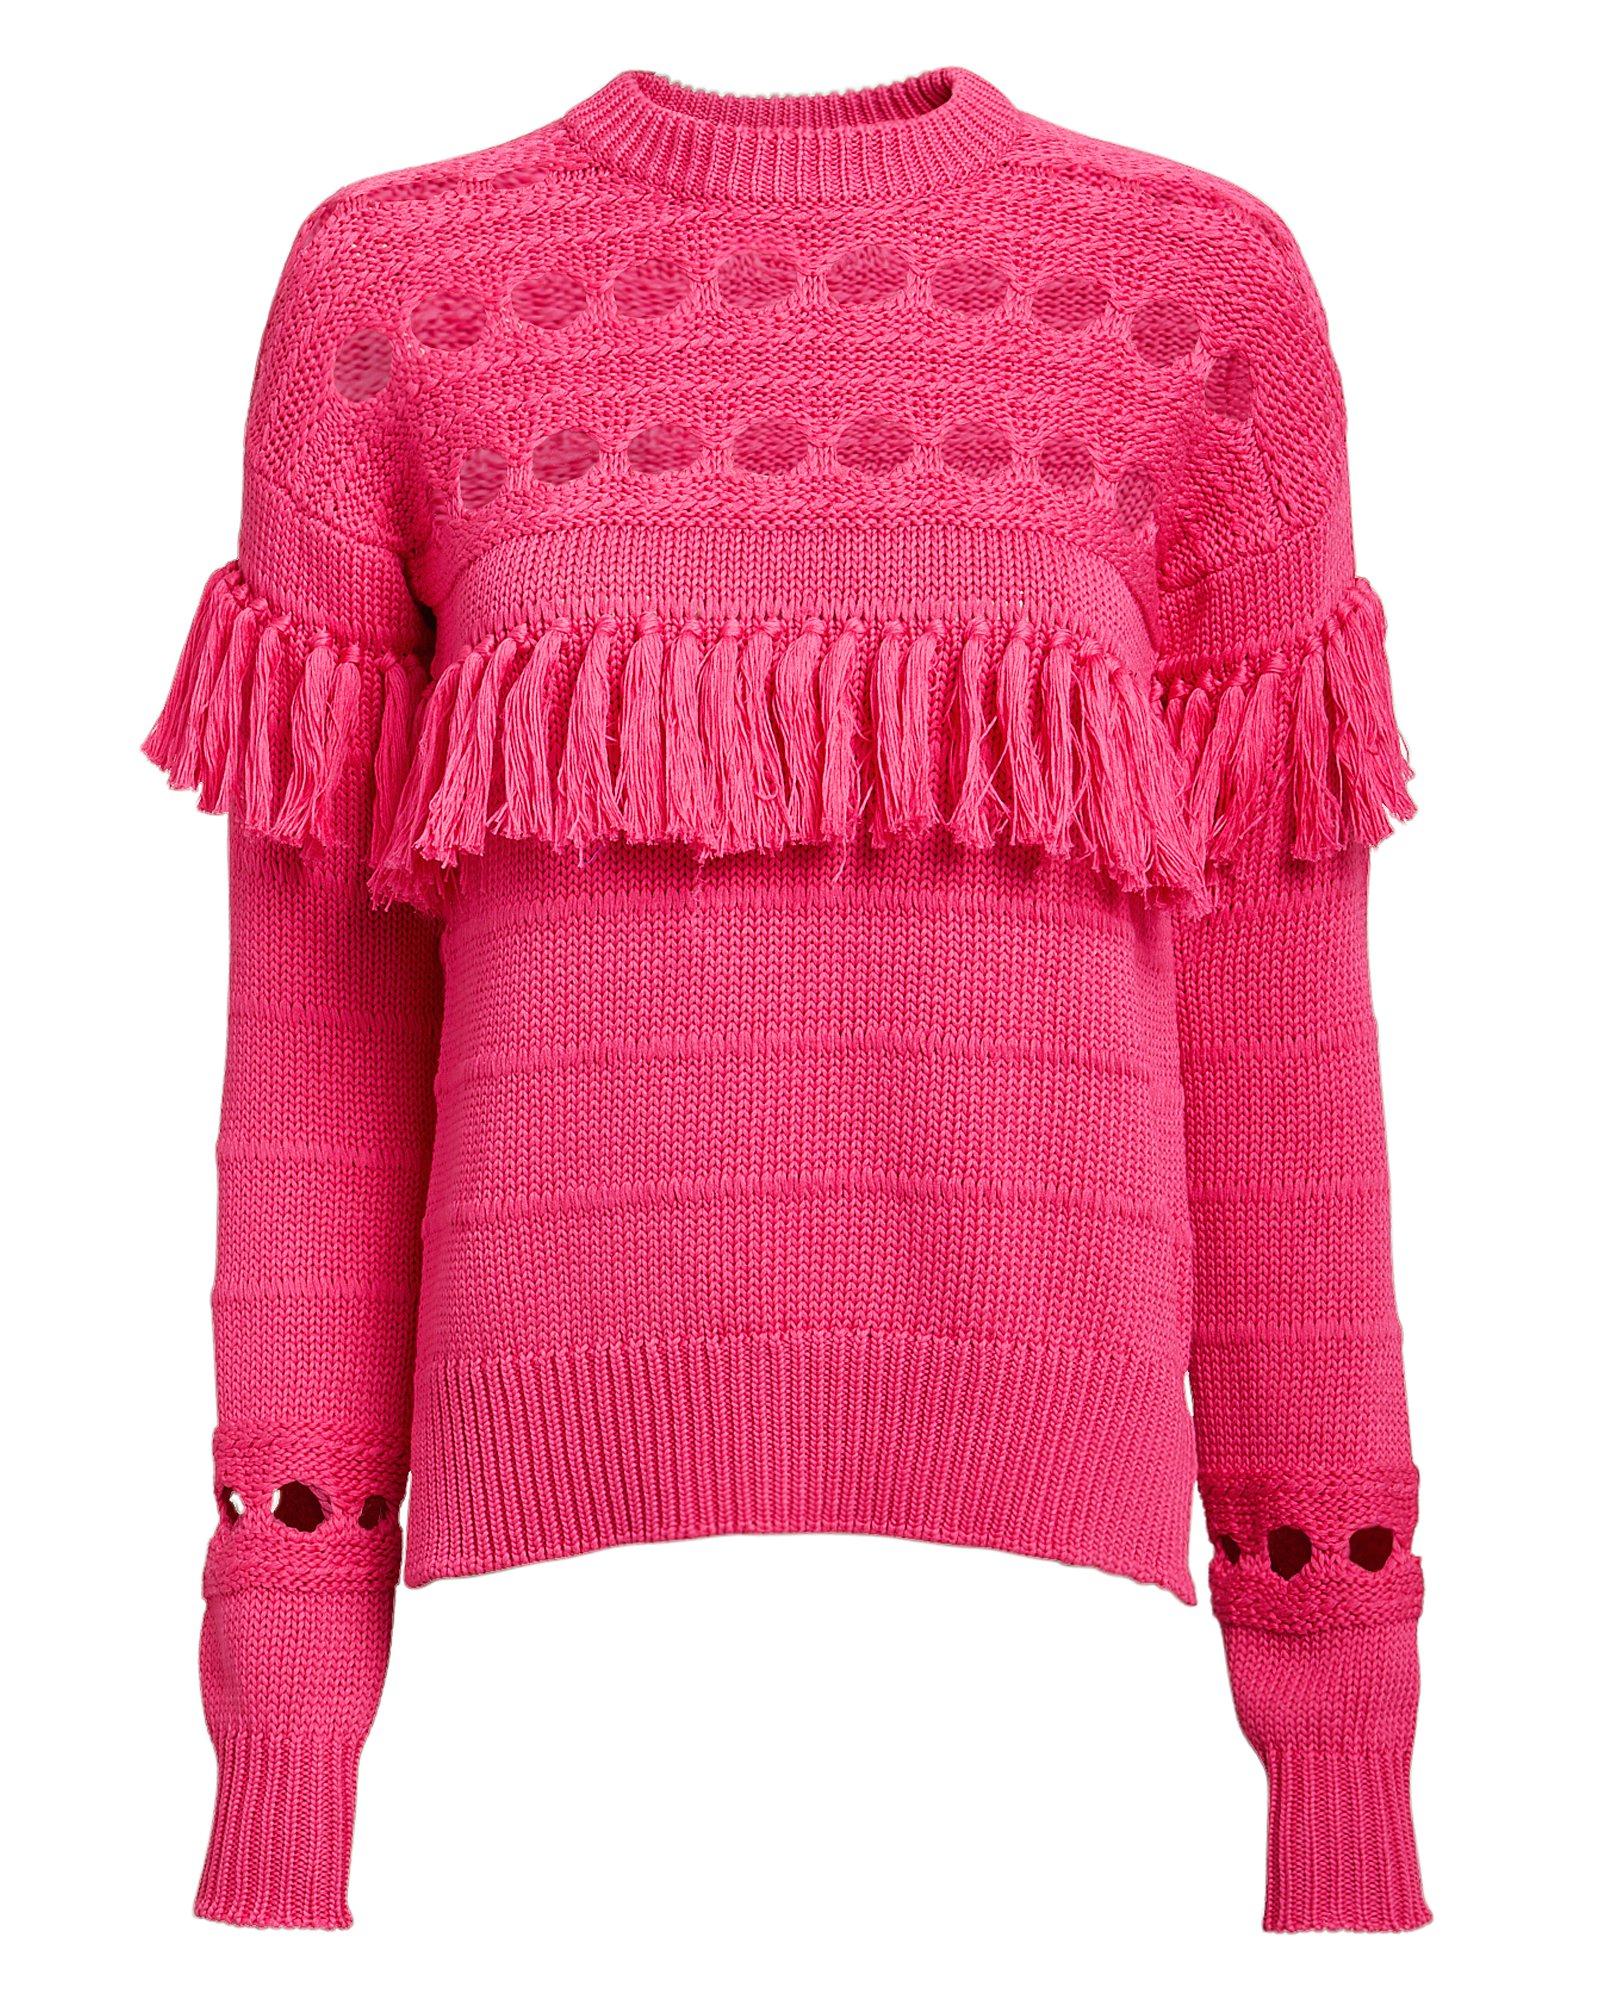 Jonathan Simkhai Cotton Chunky Tassel Sweater in Pink - Lyst